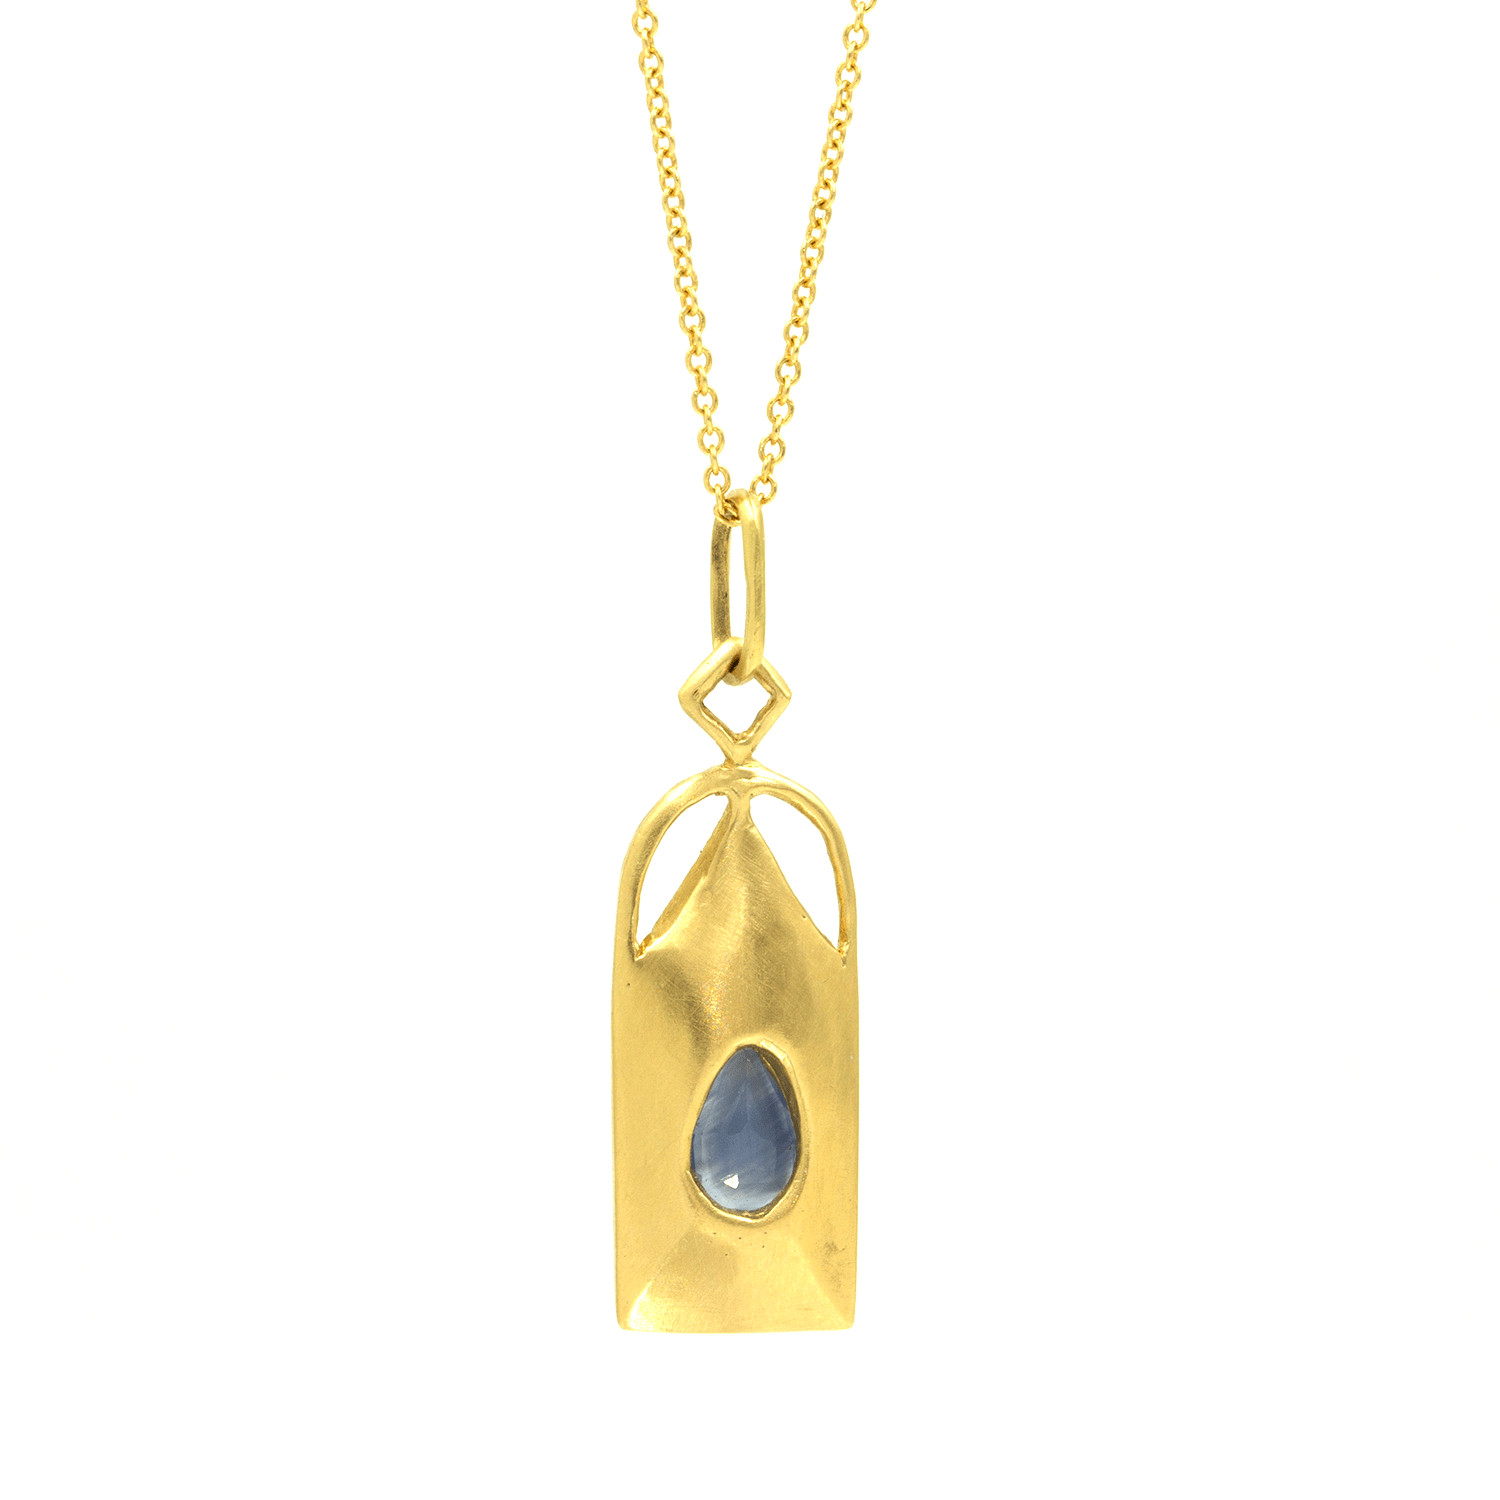 12th HOUSE line and symbol | Divine femme sapphire amulet